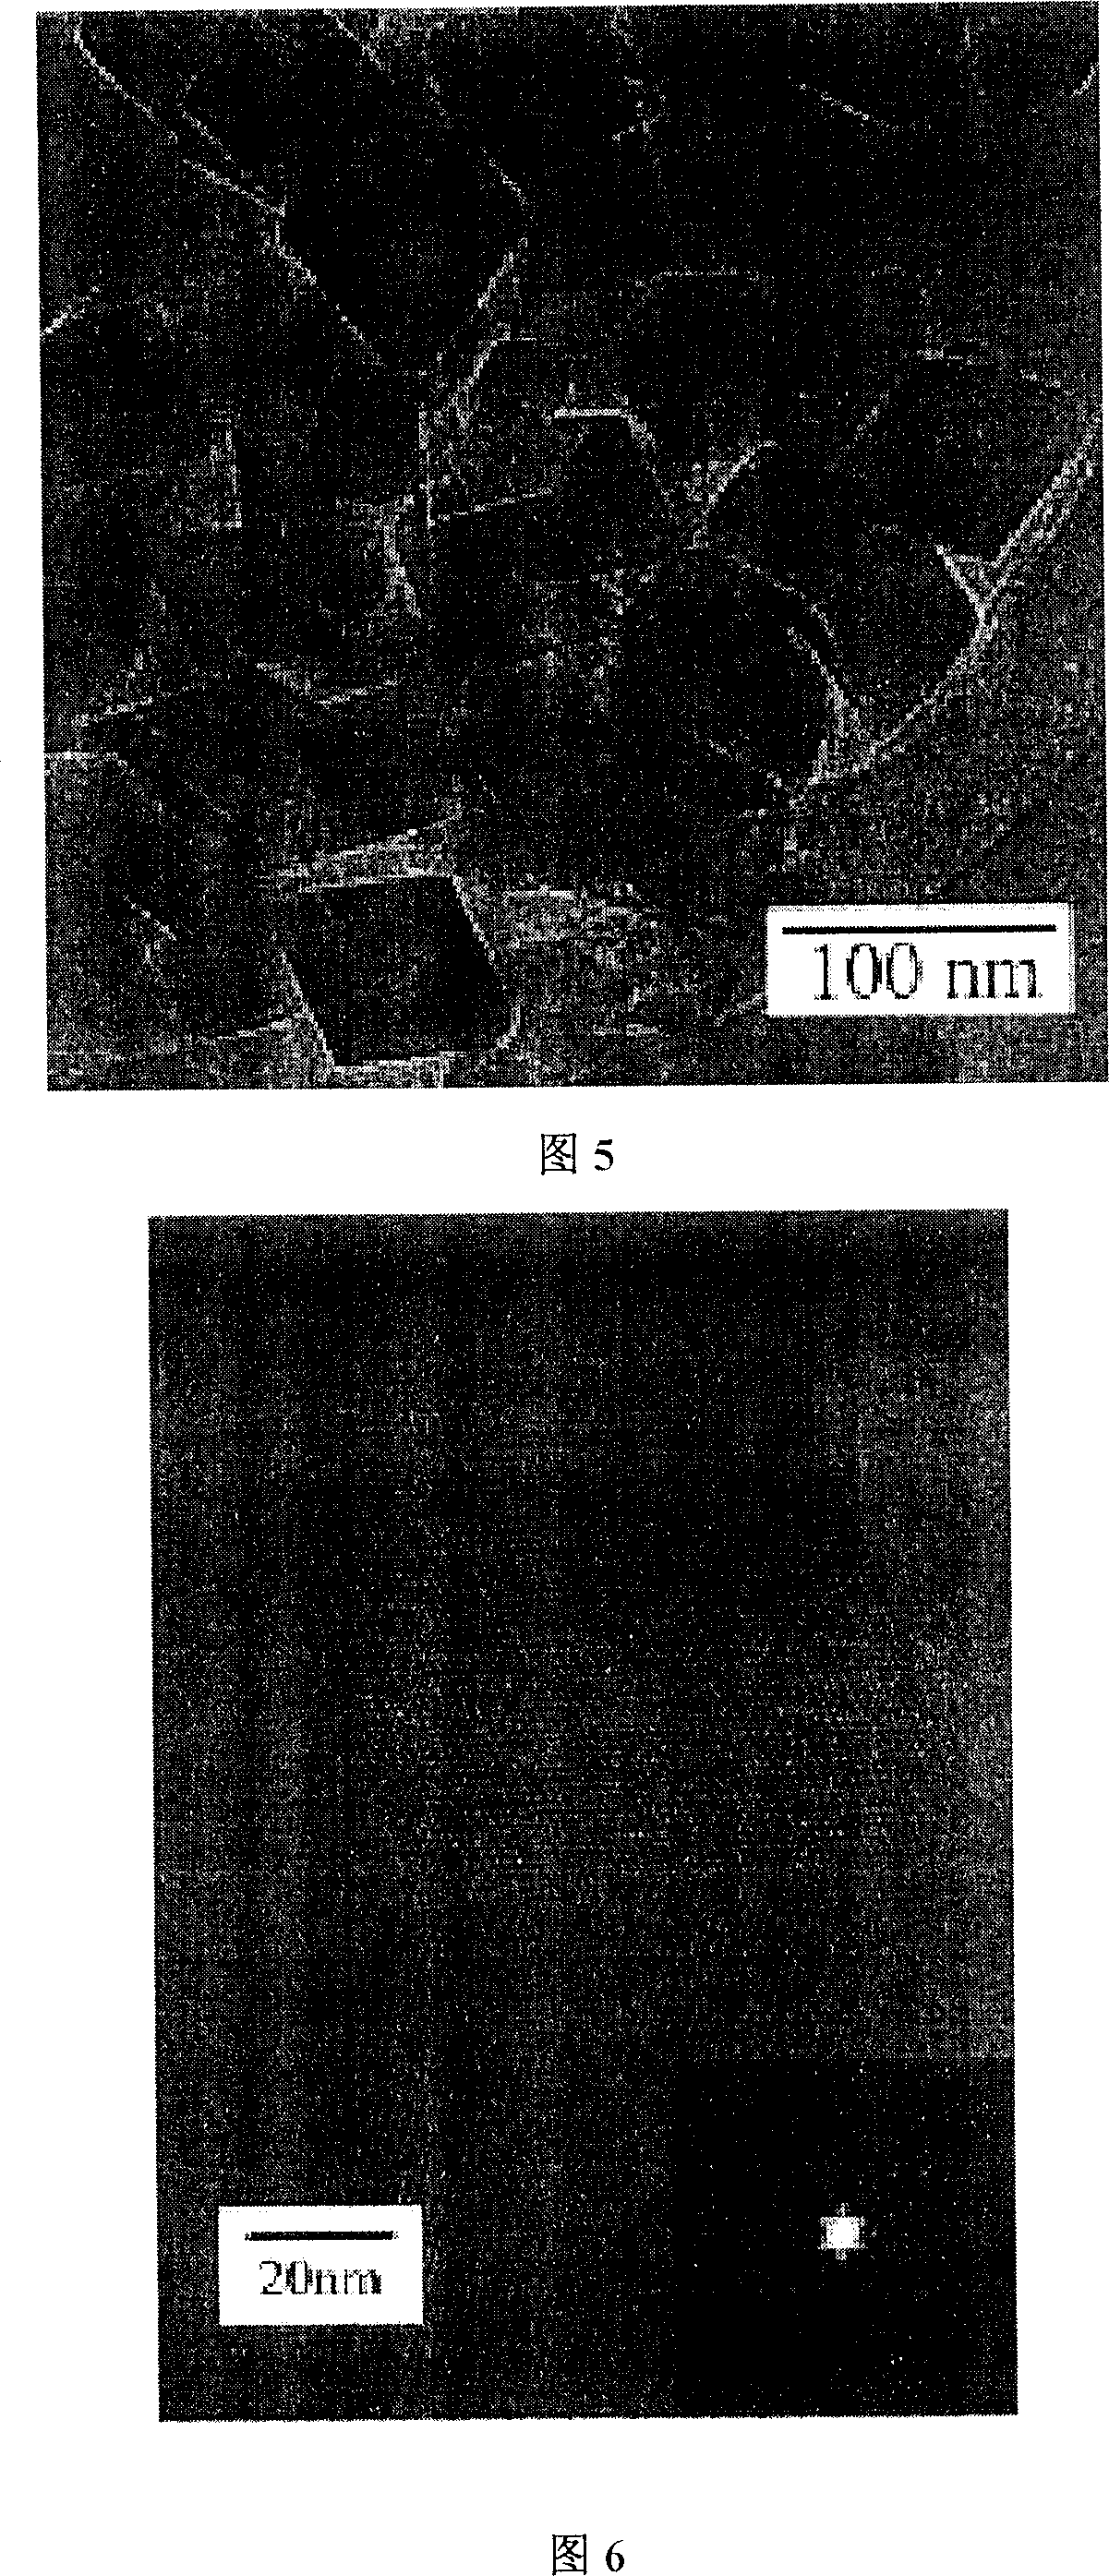 LTA and FAU molecular screen nanocrystalline preparation method